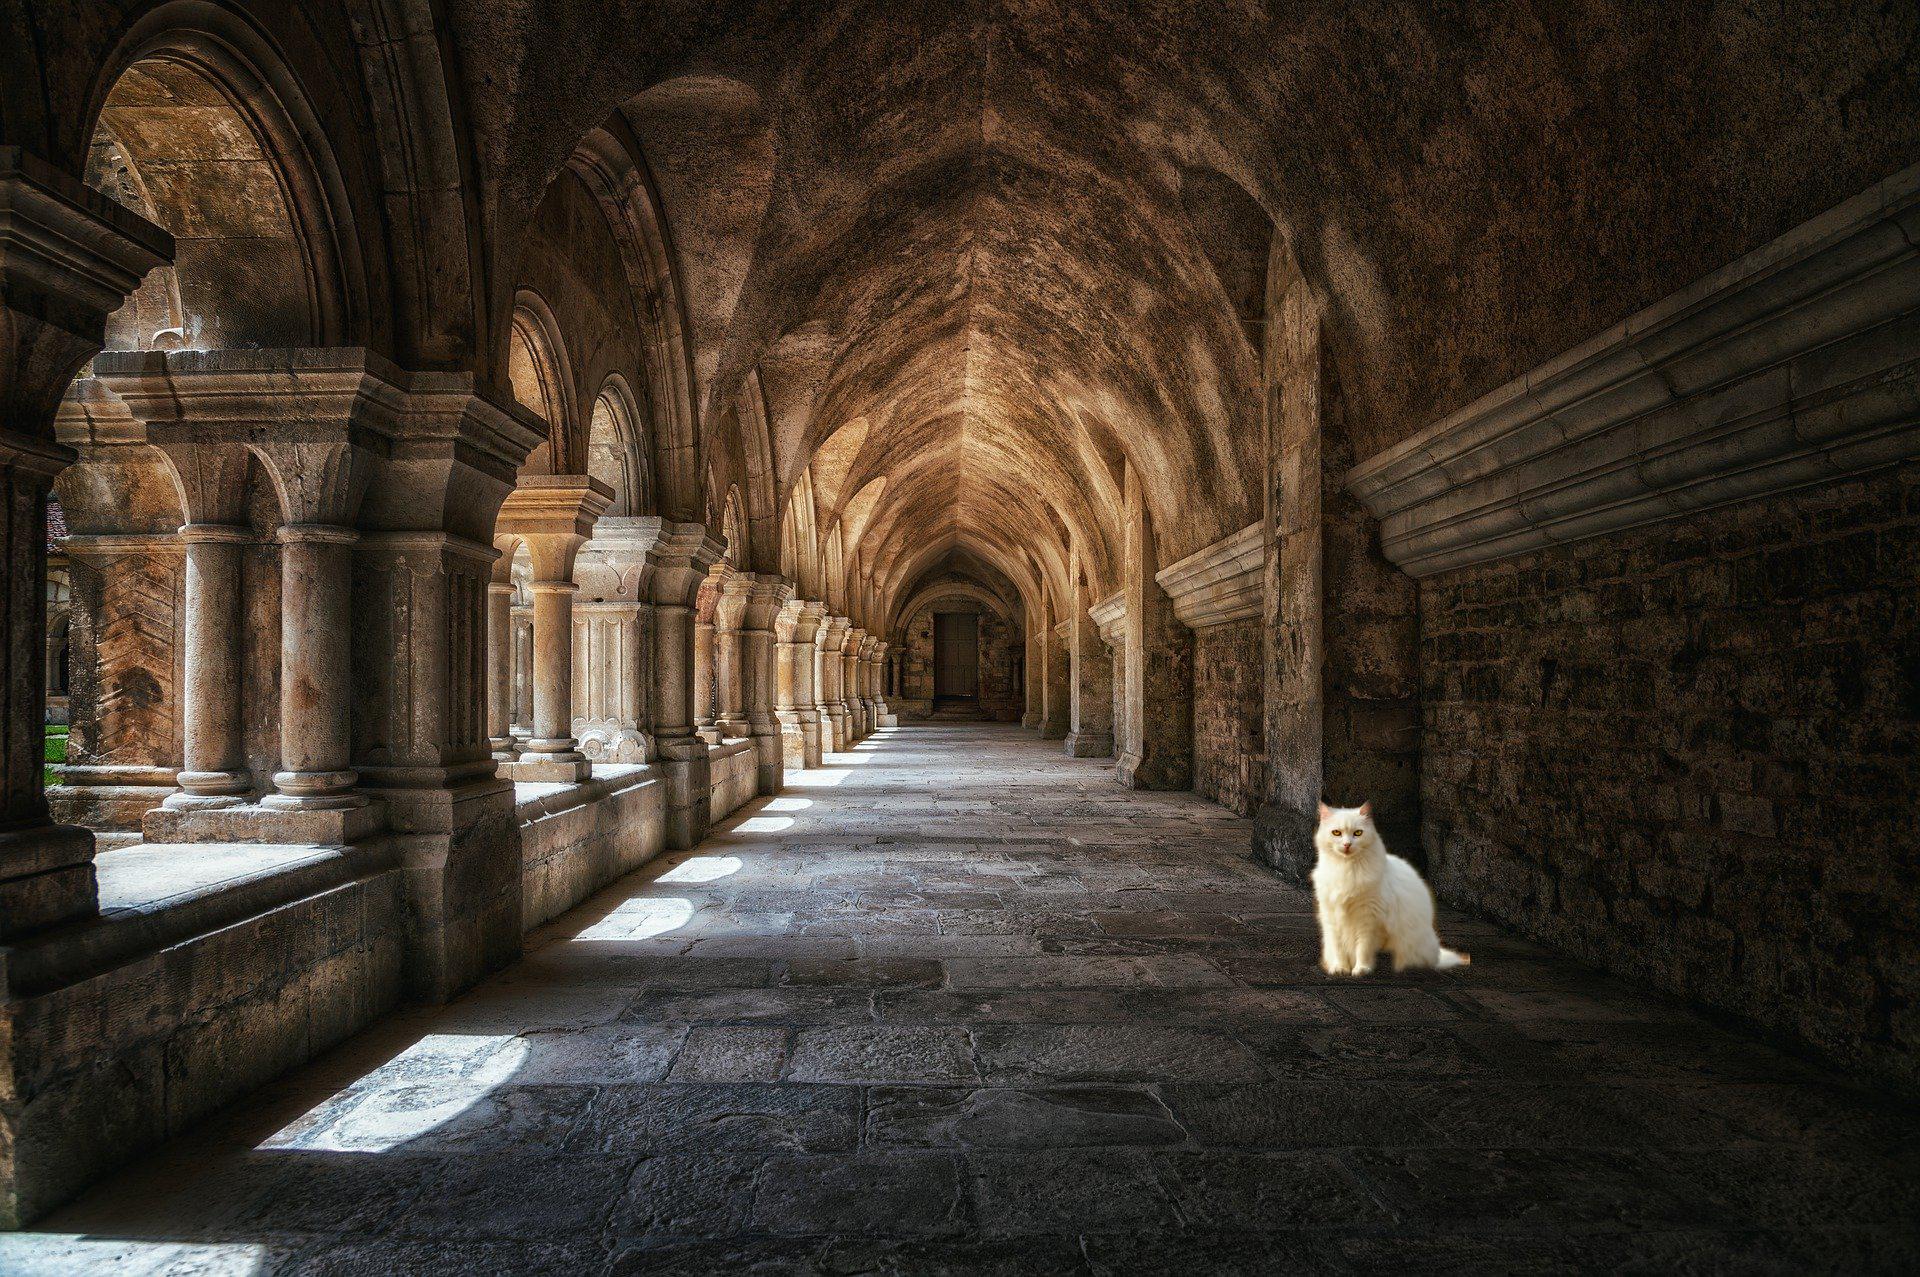 Segmented image of cat superimposed on monastery image